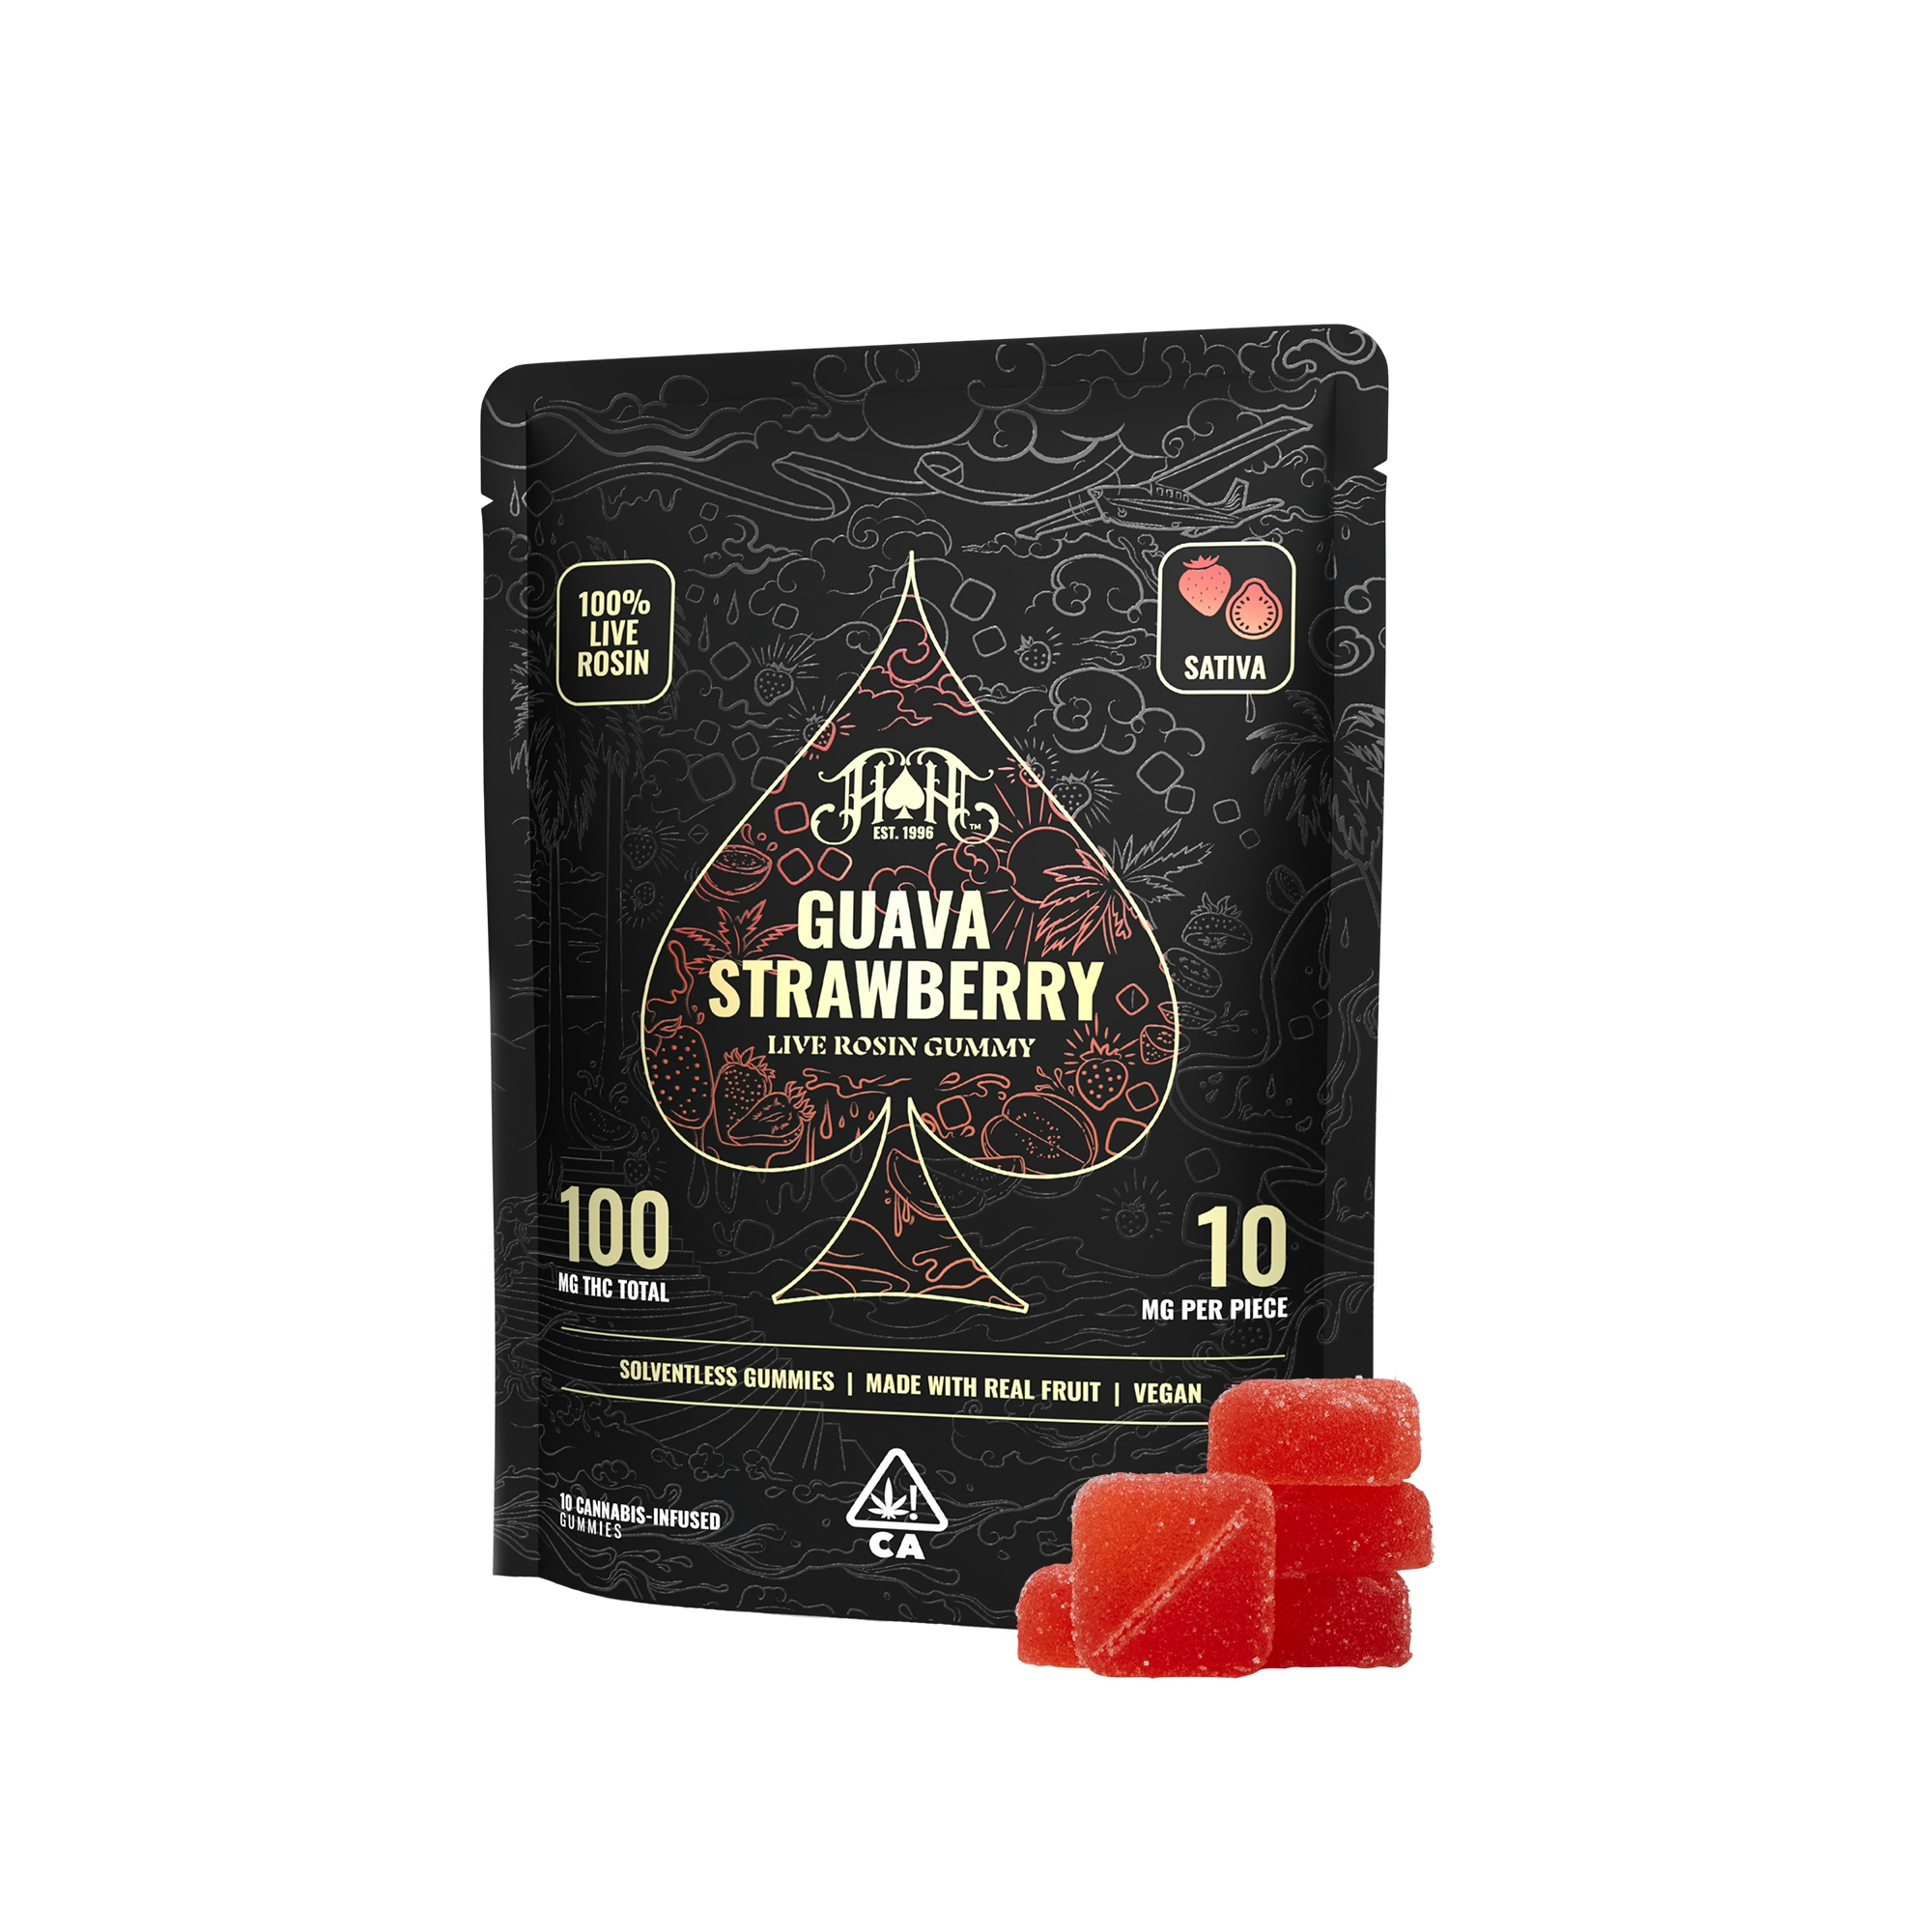 Guava Strawberry | Sativa - Live Rosin Gummies - 100mg THC